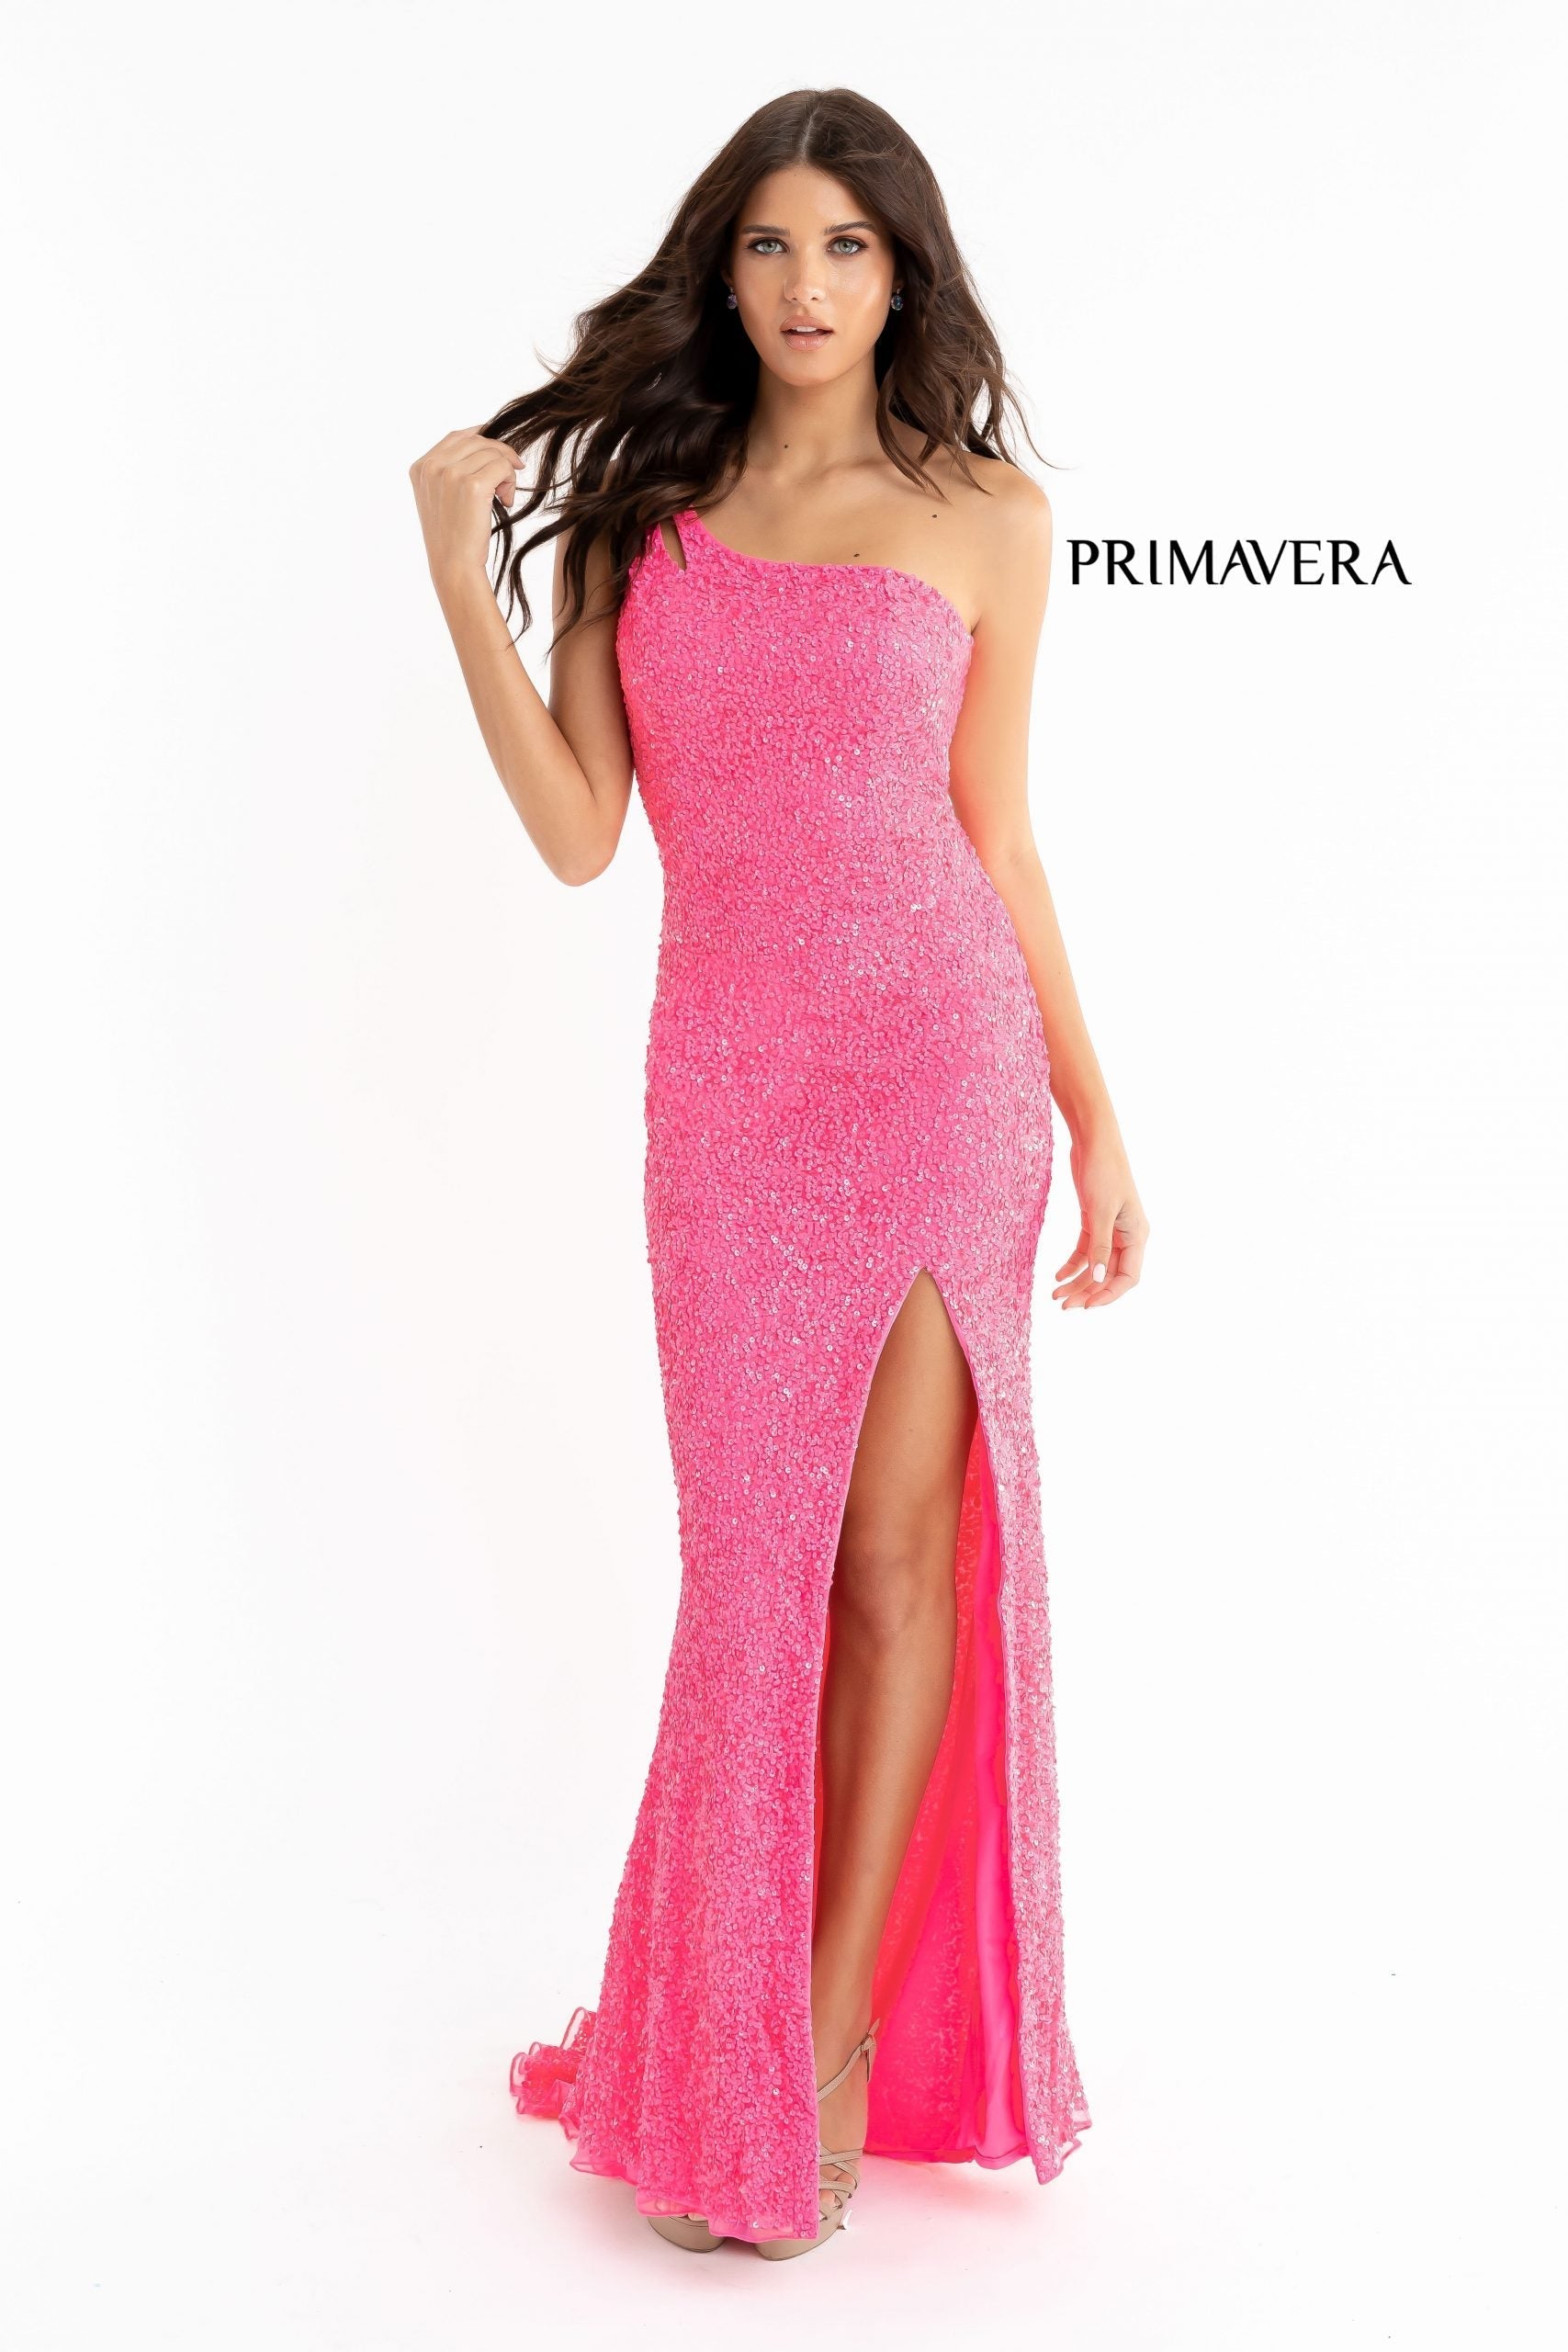 Craze Fashion Studio Pink Dye Pleated Sequin Dress 5